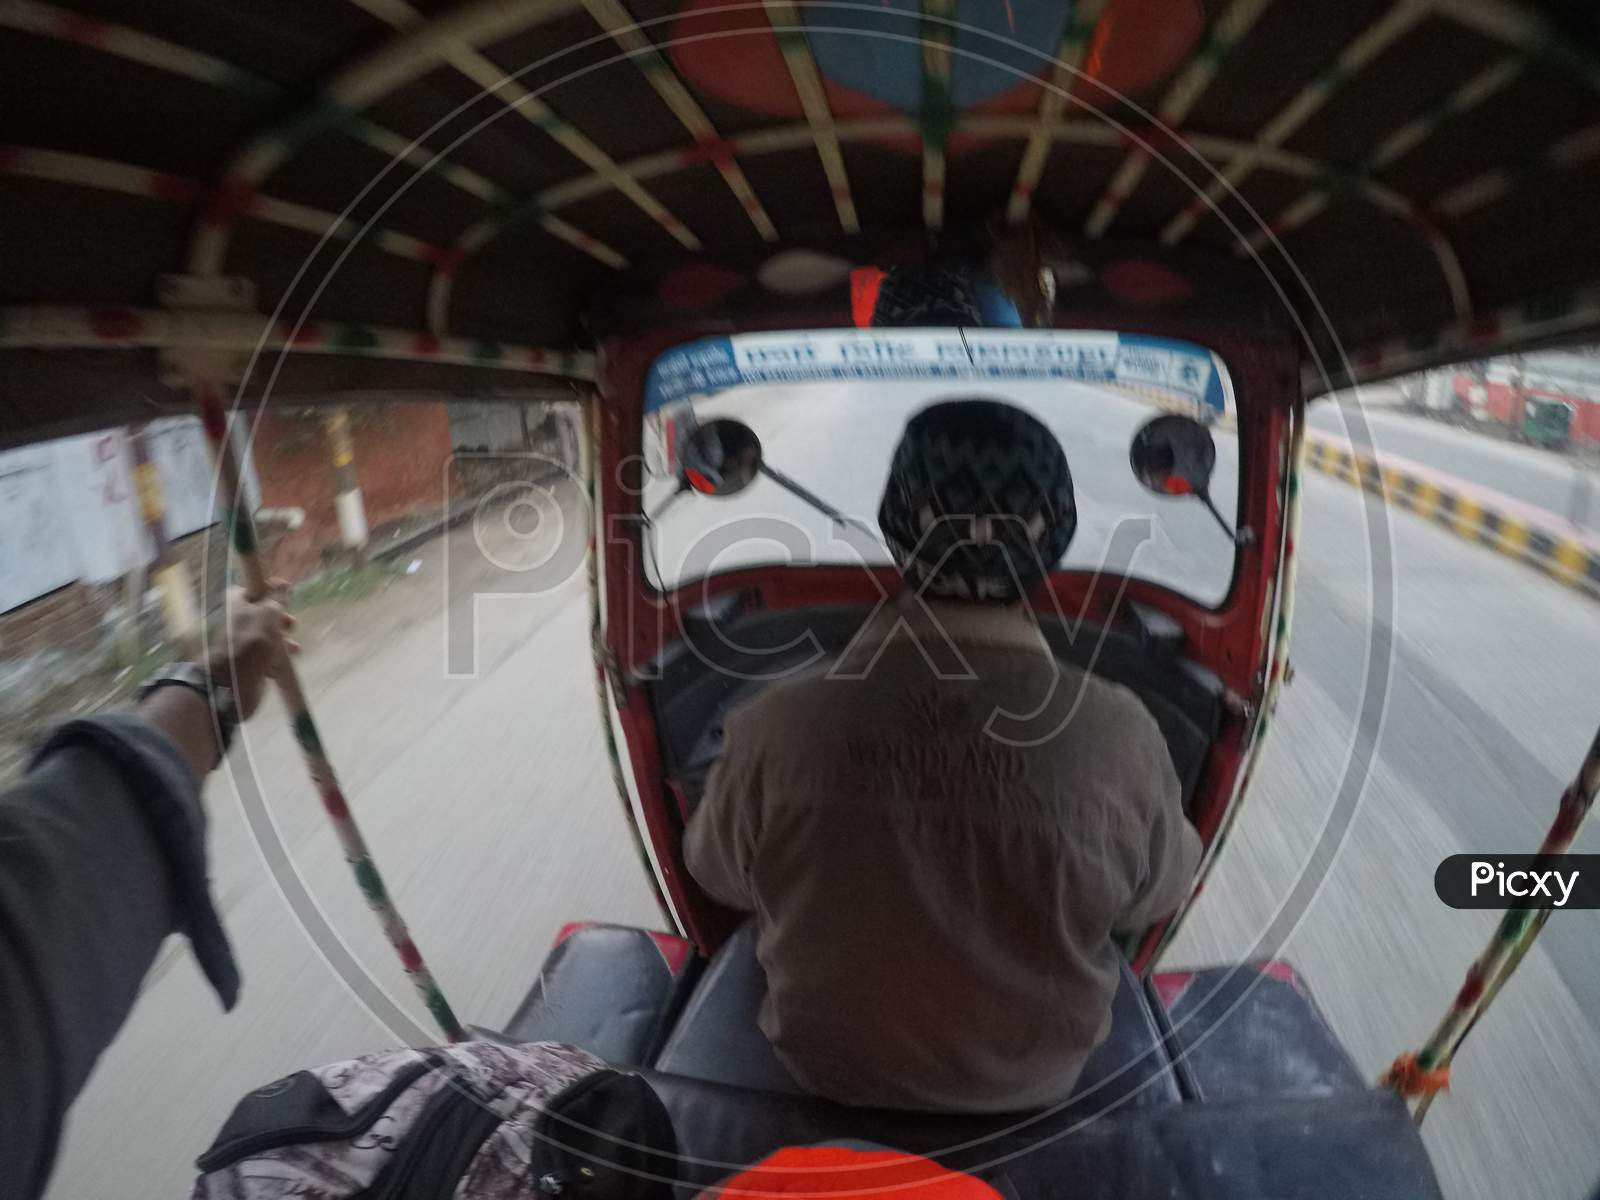 Auto Rickshaw ride in Mathura , India